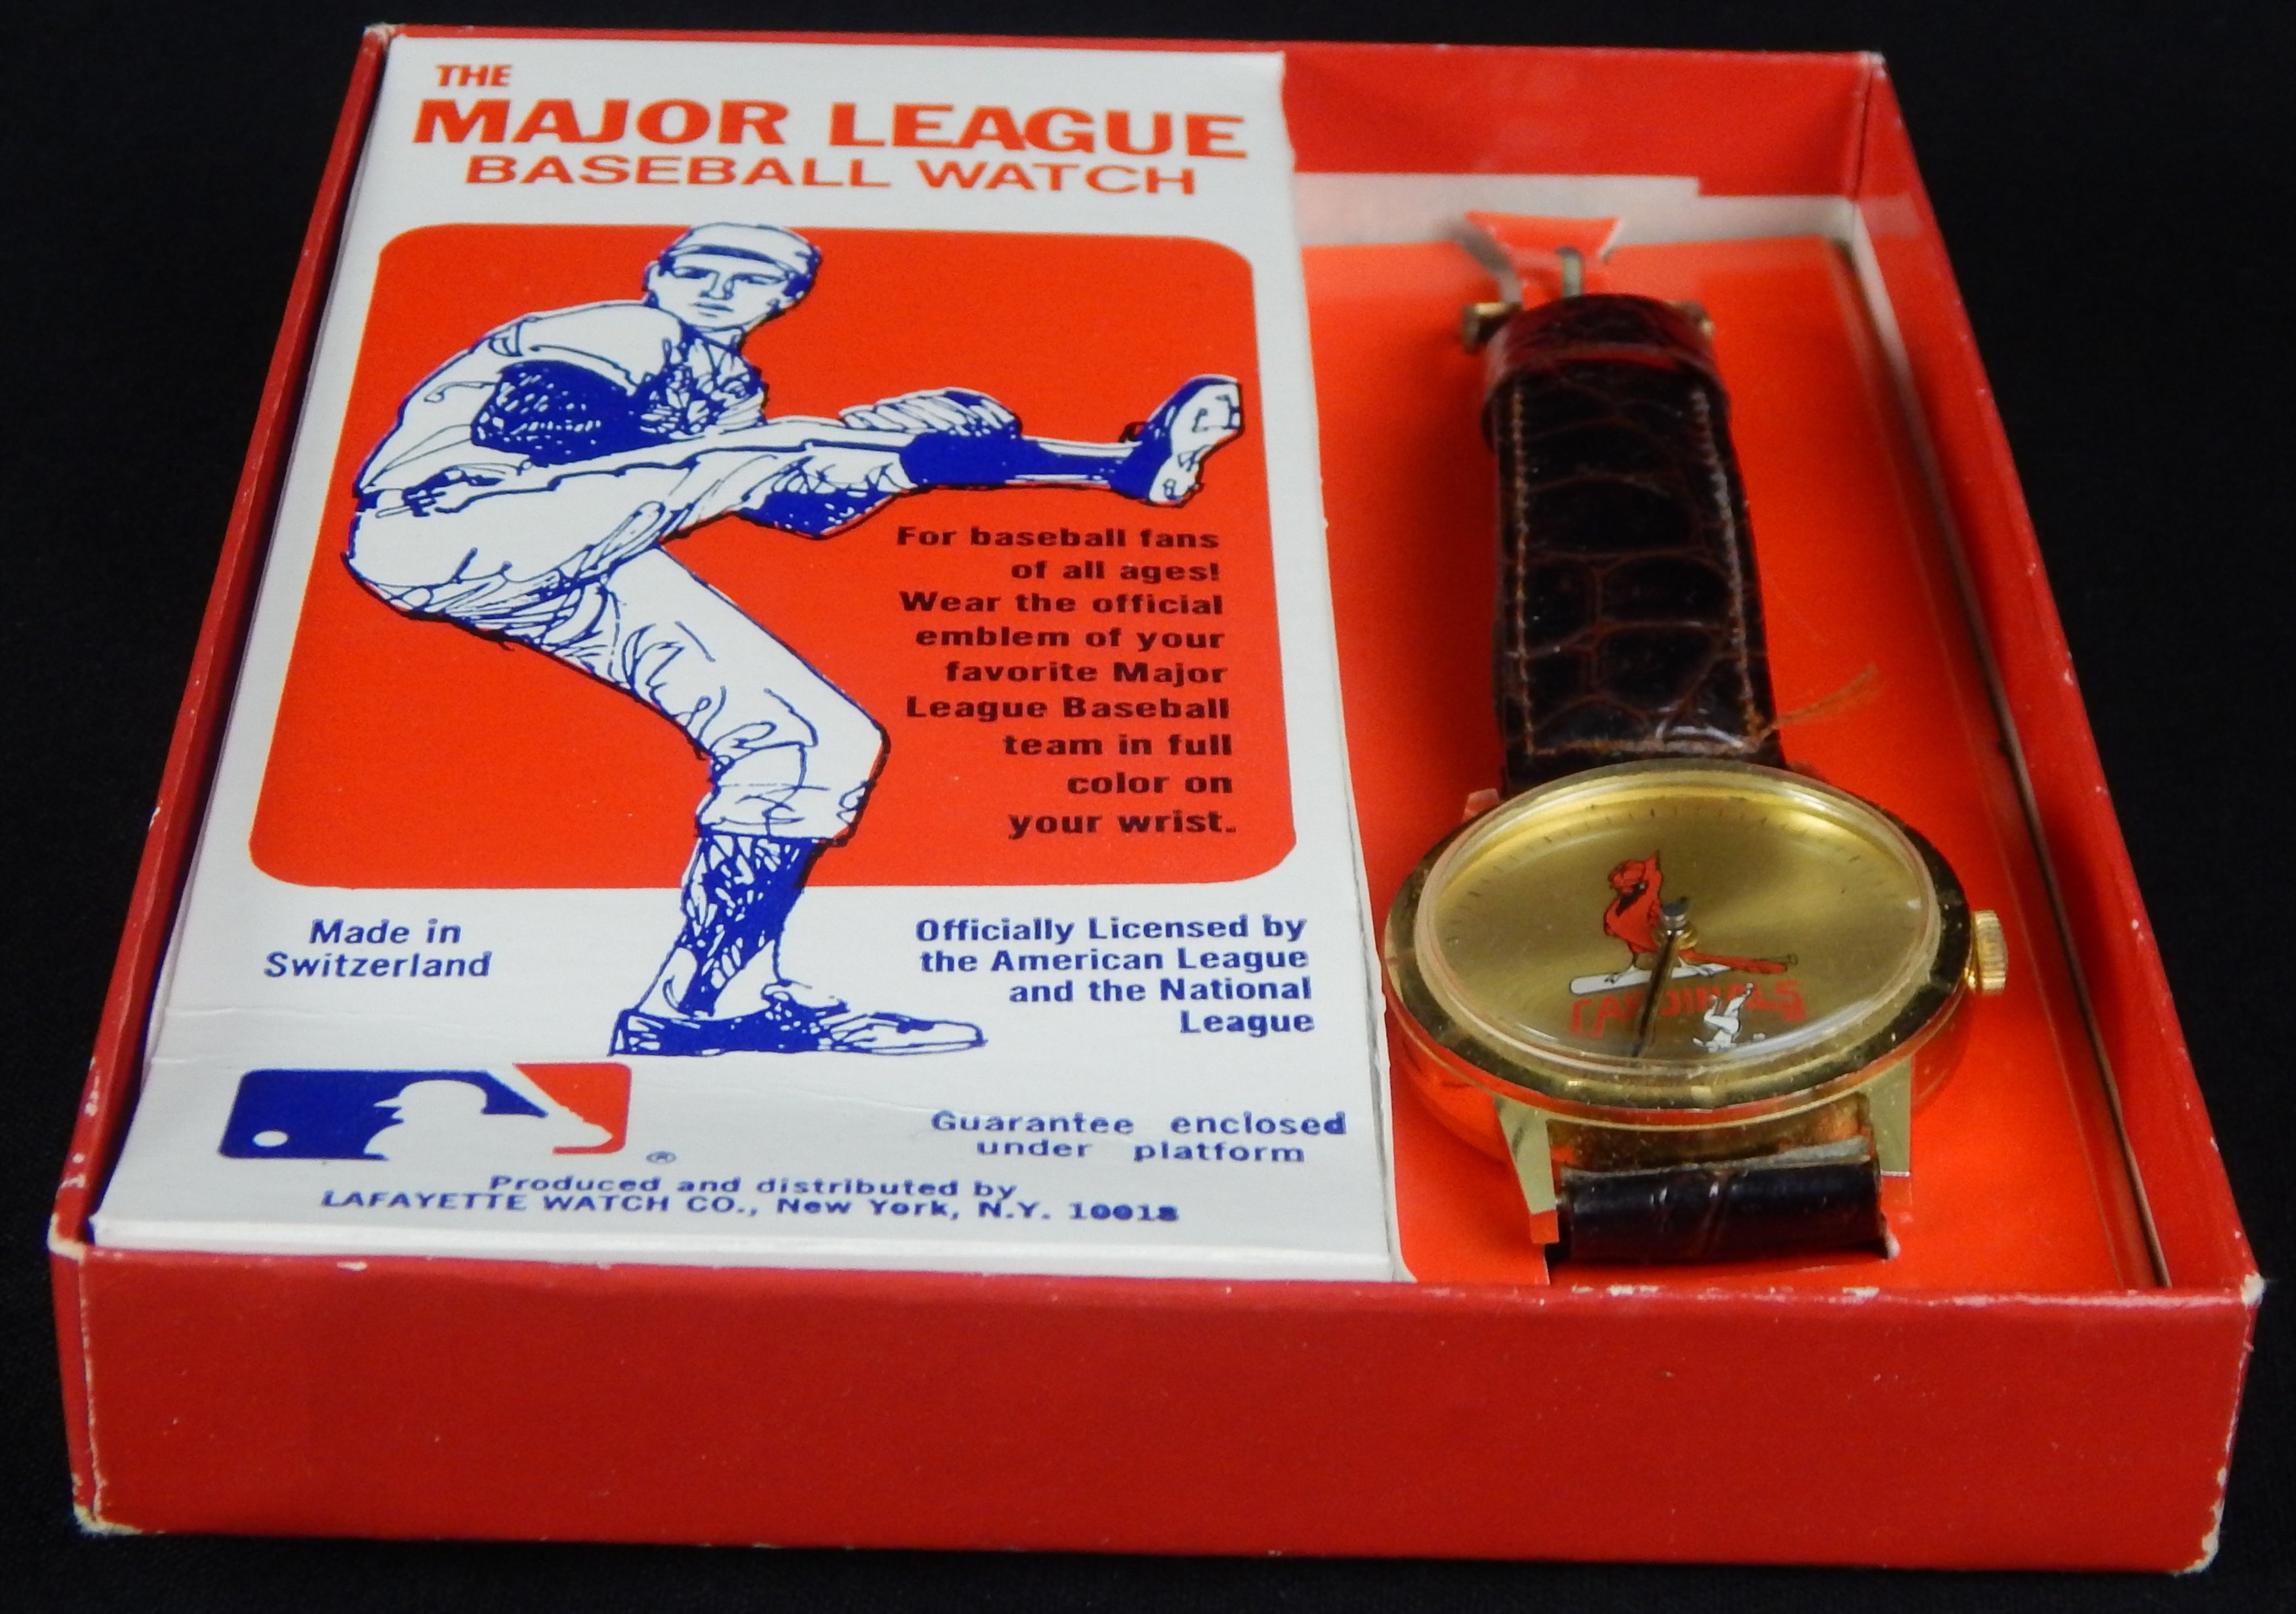 St. Louis Cardinals - 1960s St. Louis Cardinals Watch in Original Box